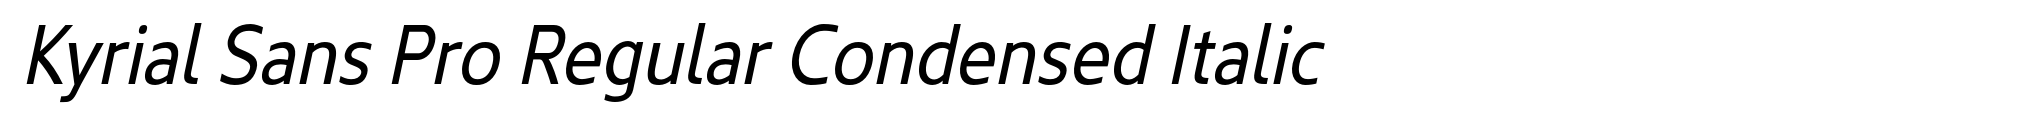 Kyrial Sans Pro Regular Condensed Italic image